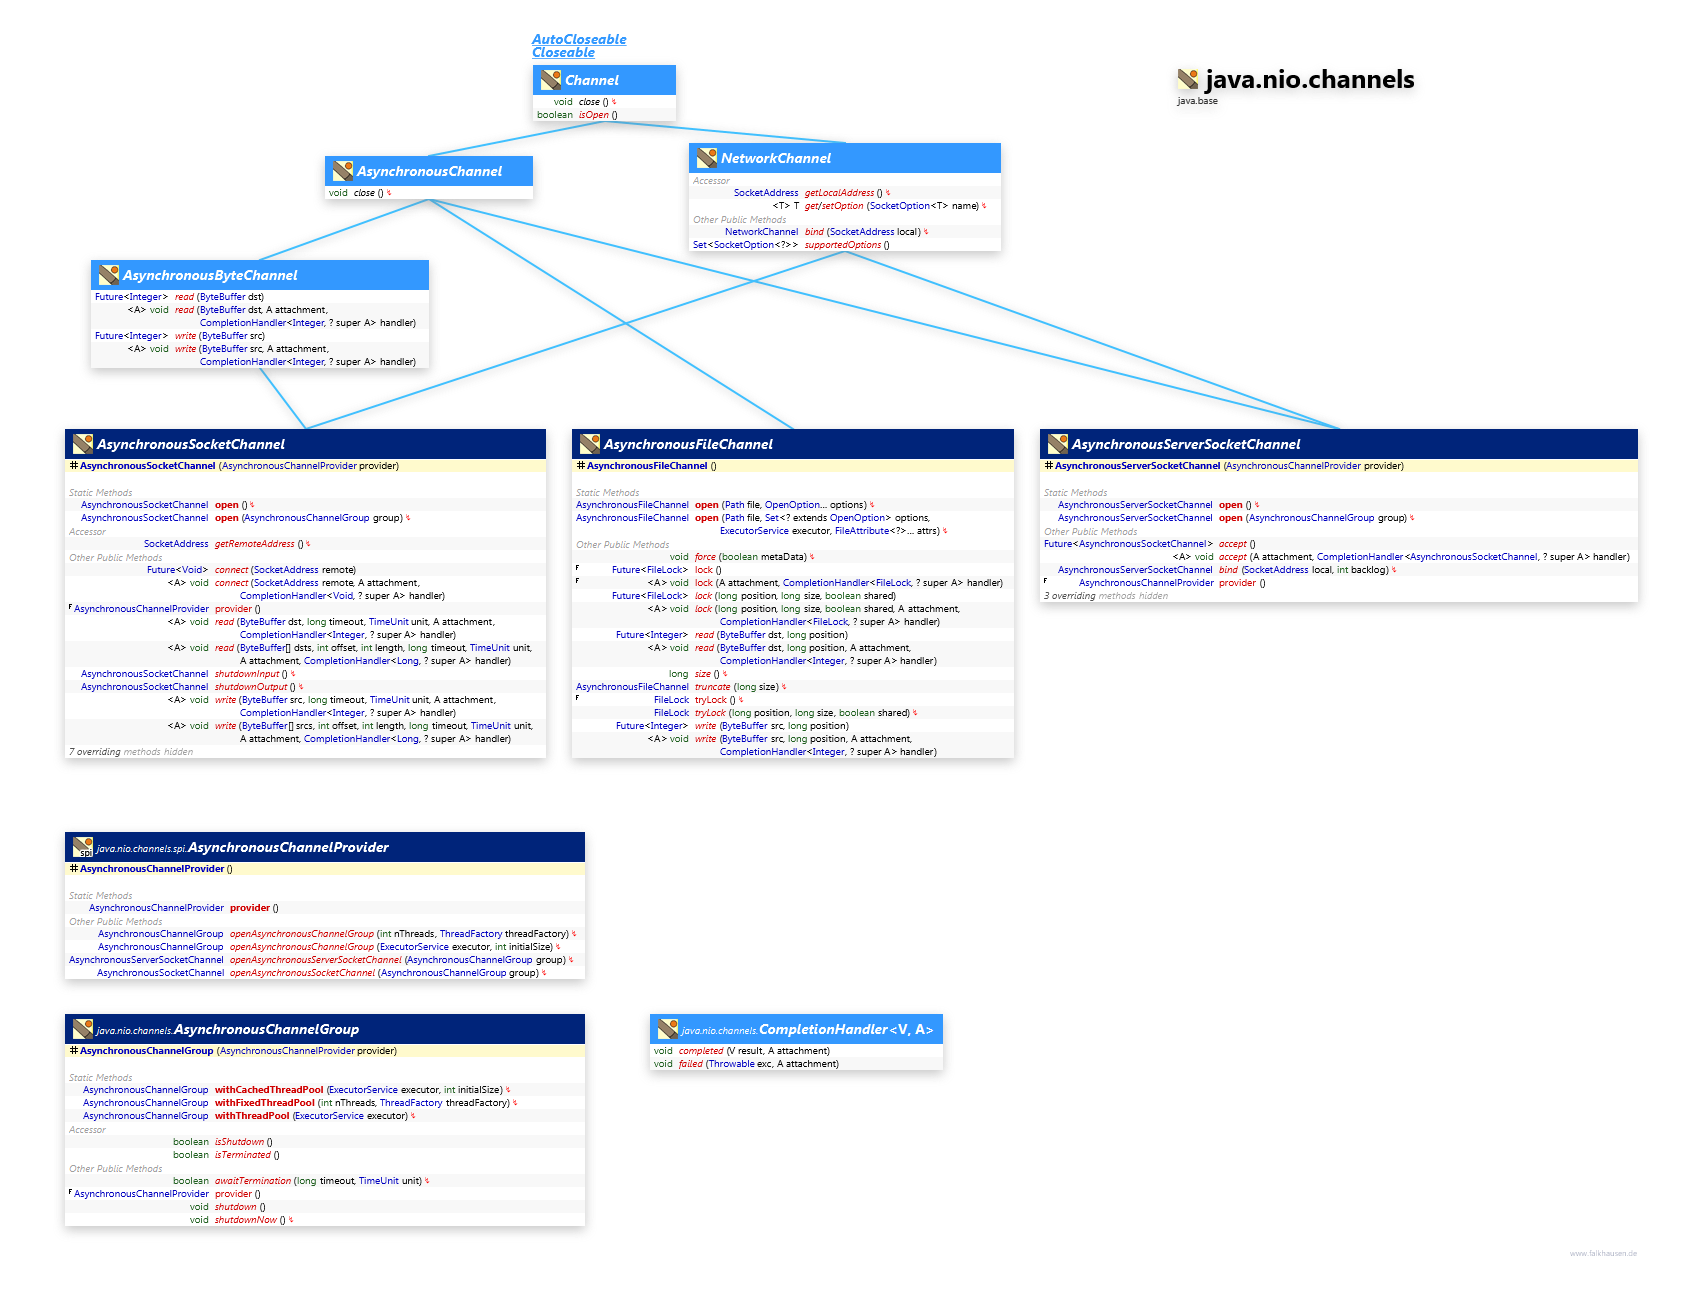 java.nio.channels AsynchronousChannel class diagram and api documentation for Java 10